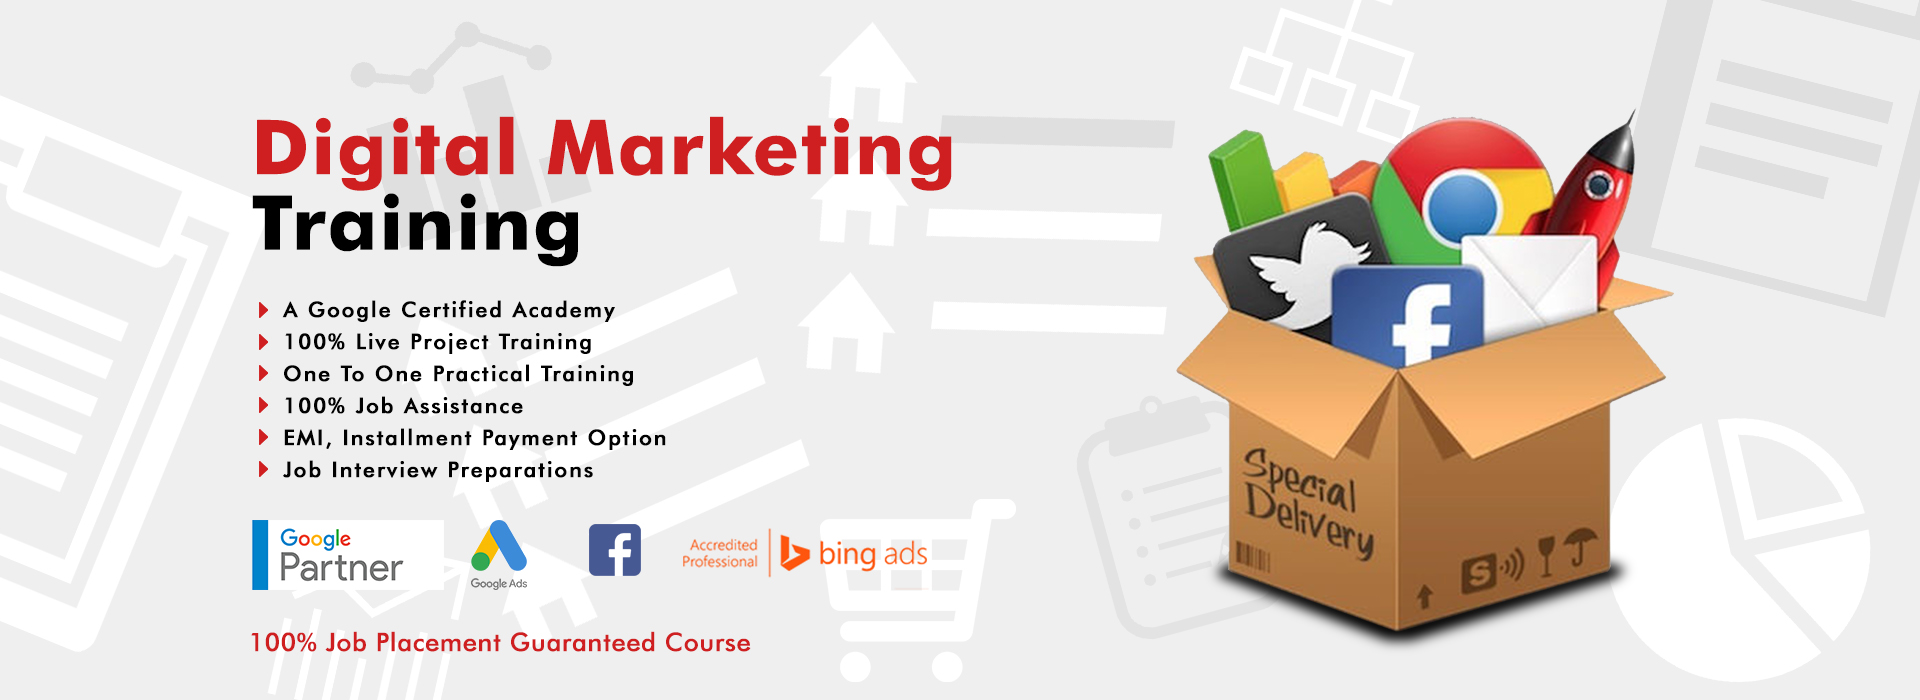 digital marketing training banner